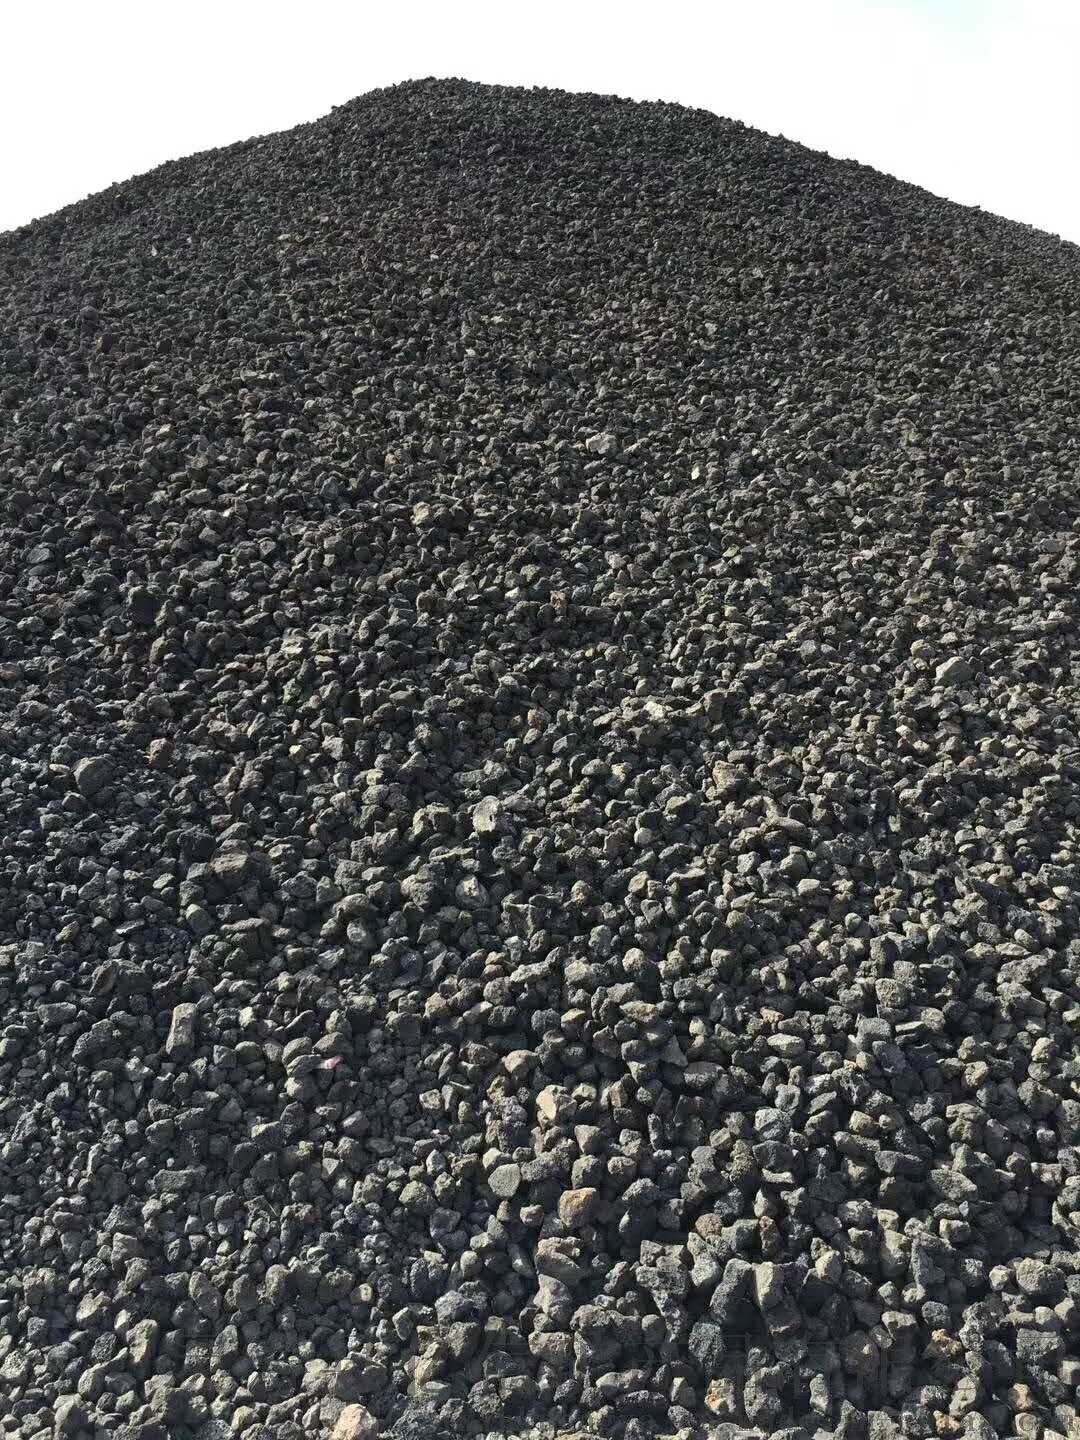 黑色火山岩图foto-2